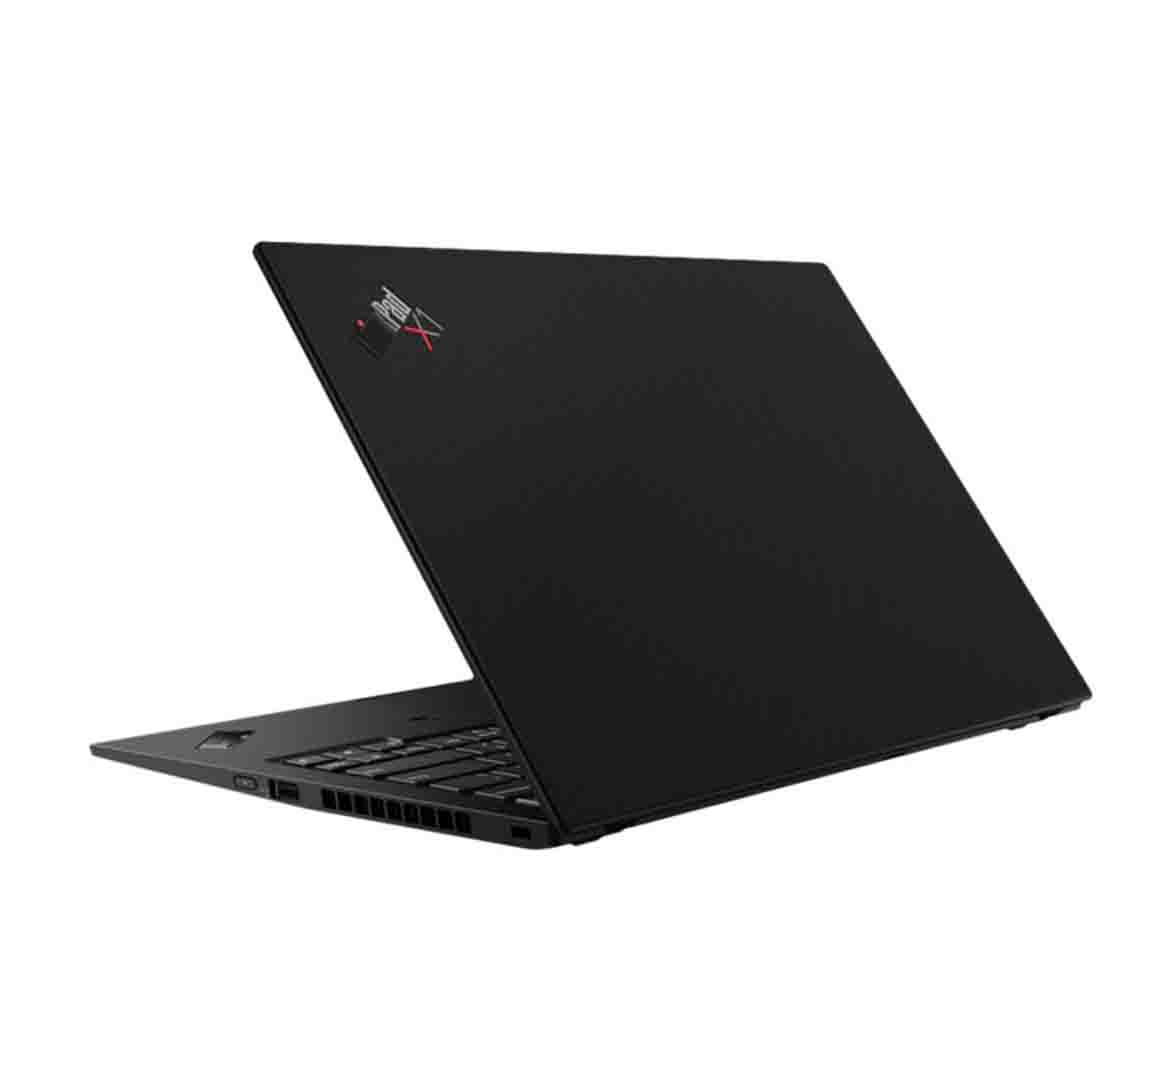 Lenovo ThinkPad x1 Carbon Business Laptop, Intel Core i5-4th Gen. CPU, 8GB RAM, 256GB SSD, 14 inch Display, Windows 10 Pro, Refurbished Laptop